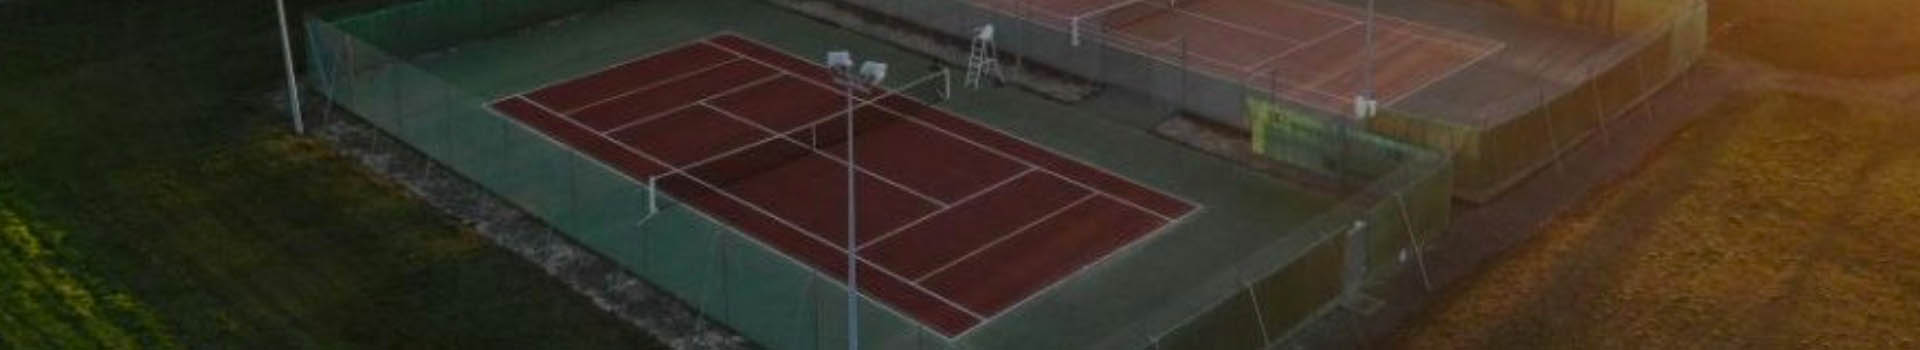 TCPG (Tennis)